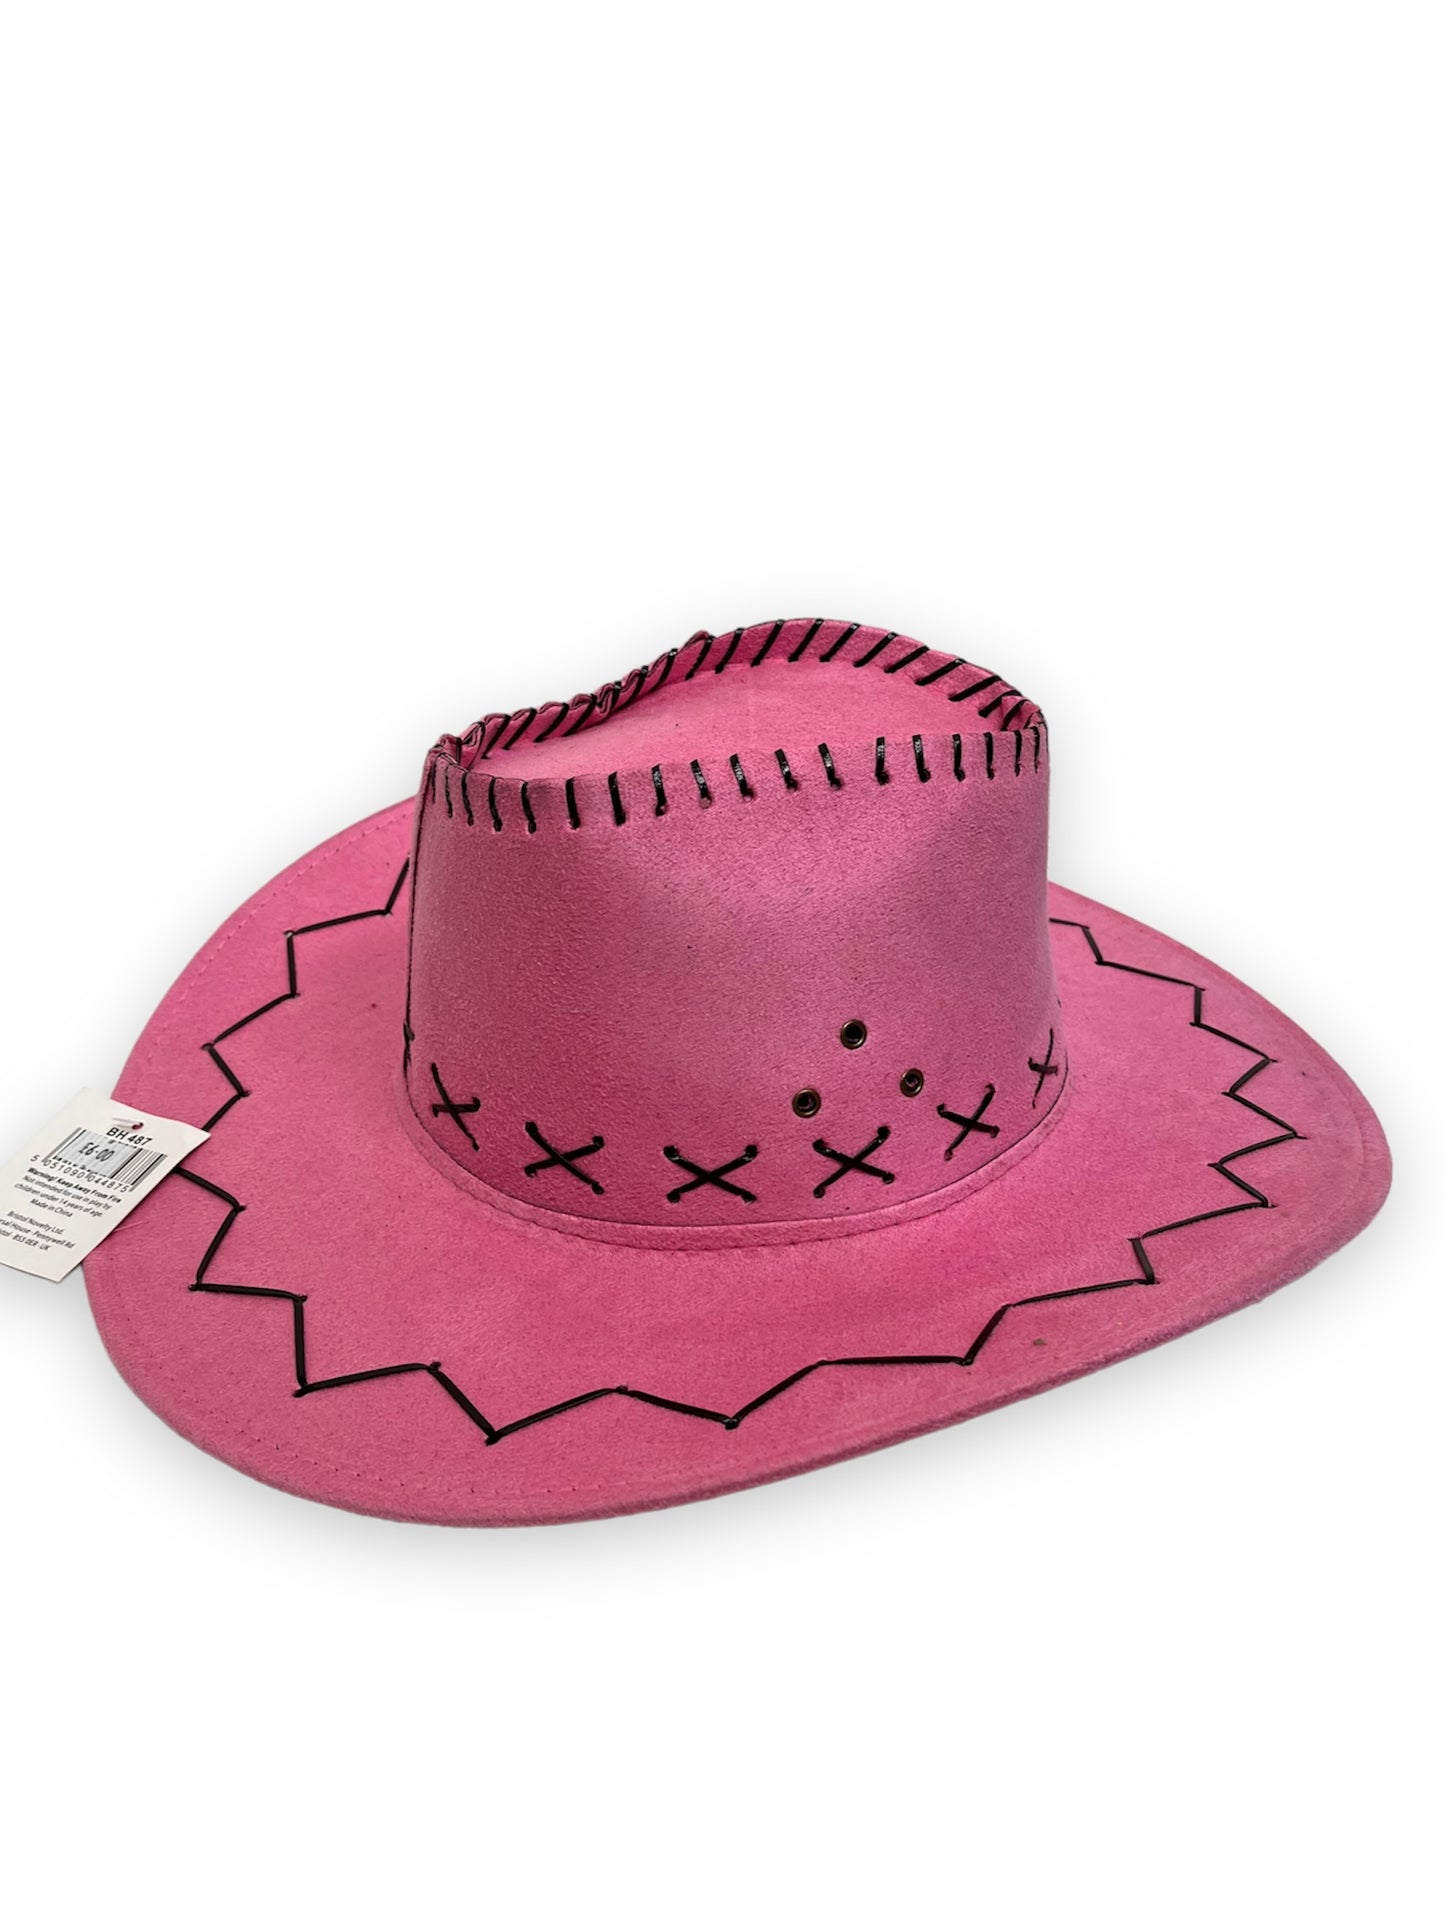 Faux suede Cowboy hat Pink - New